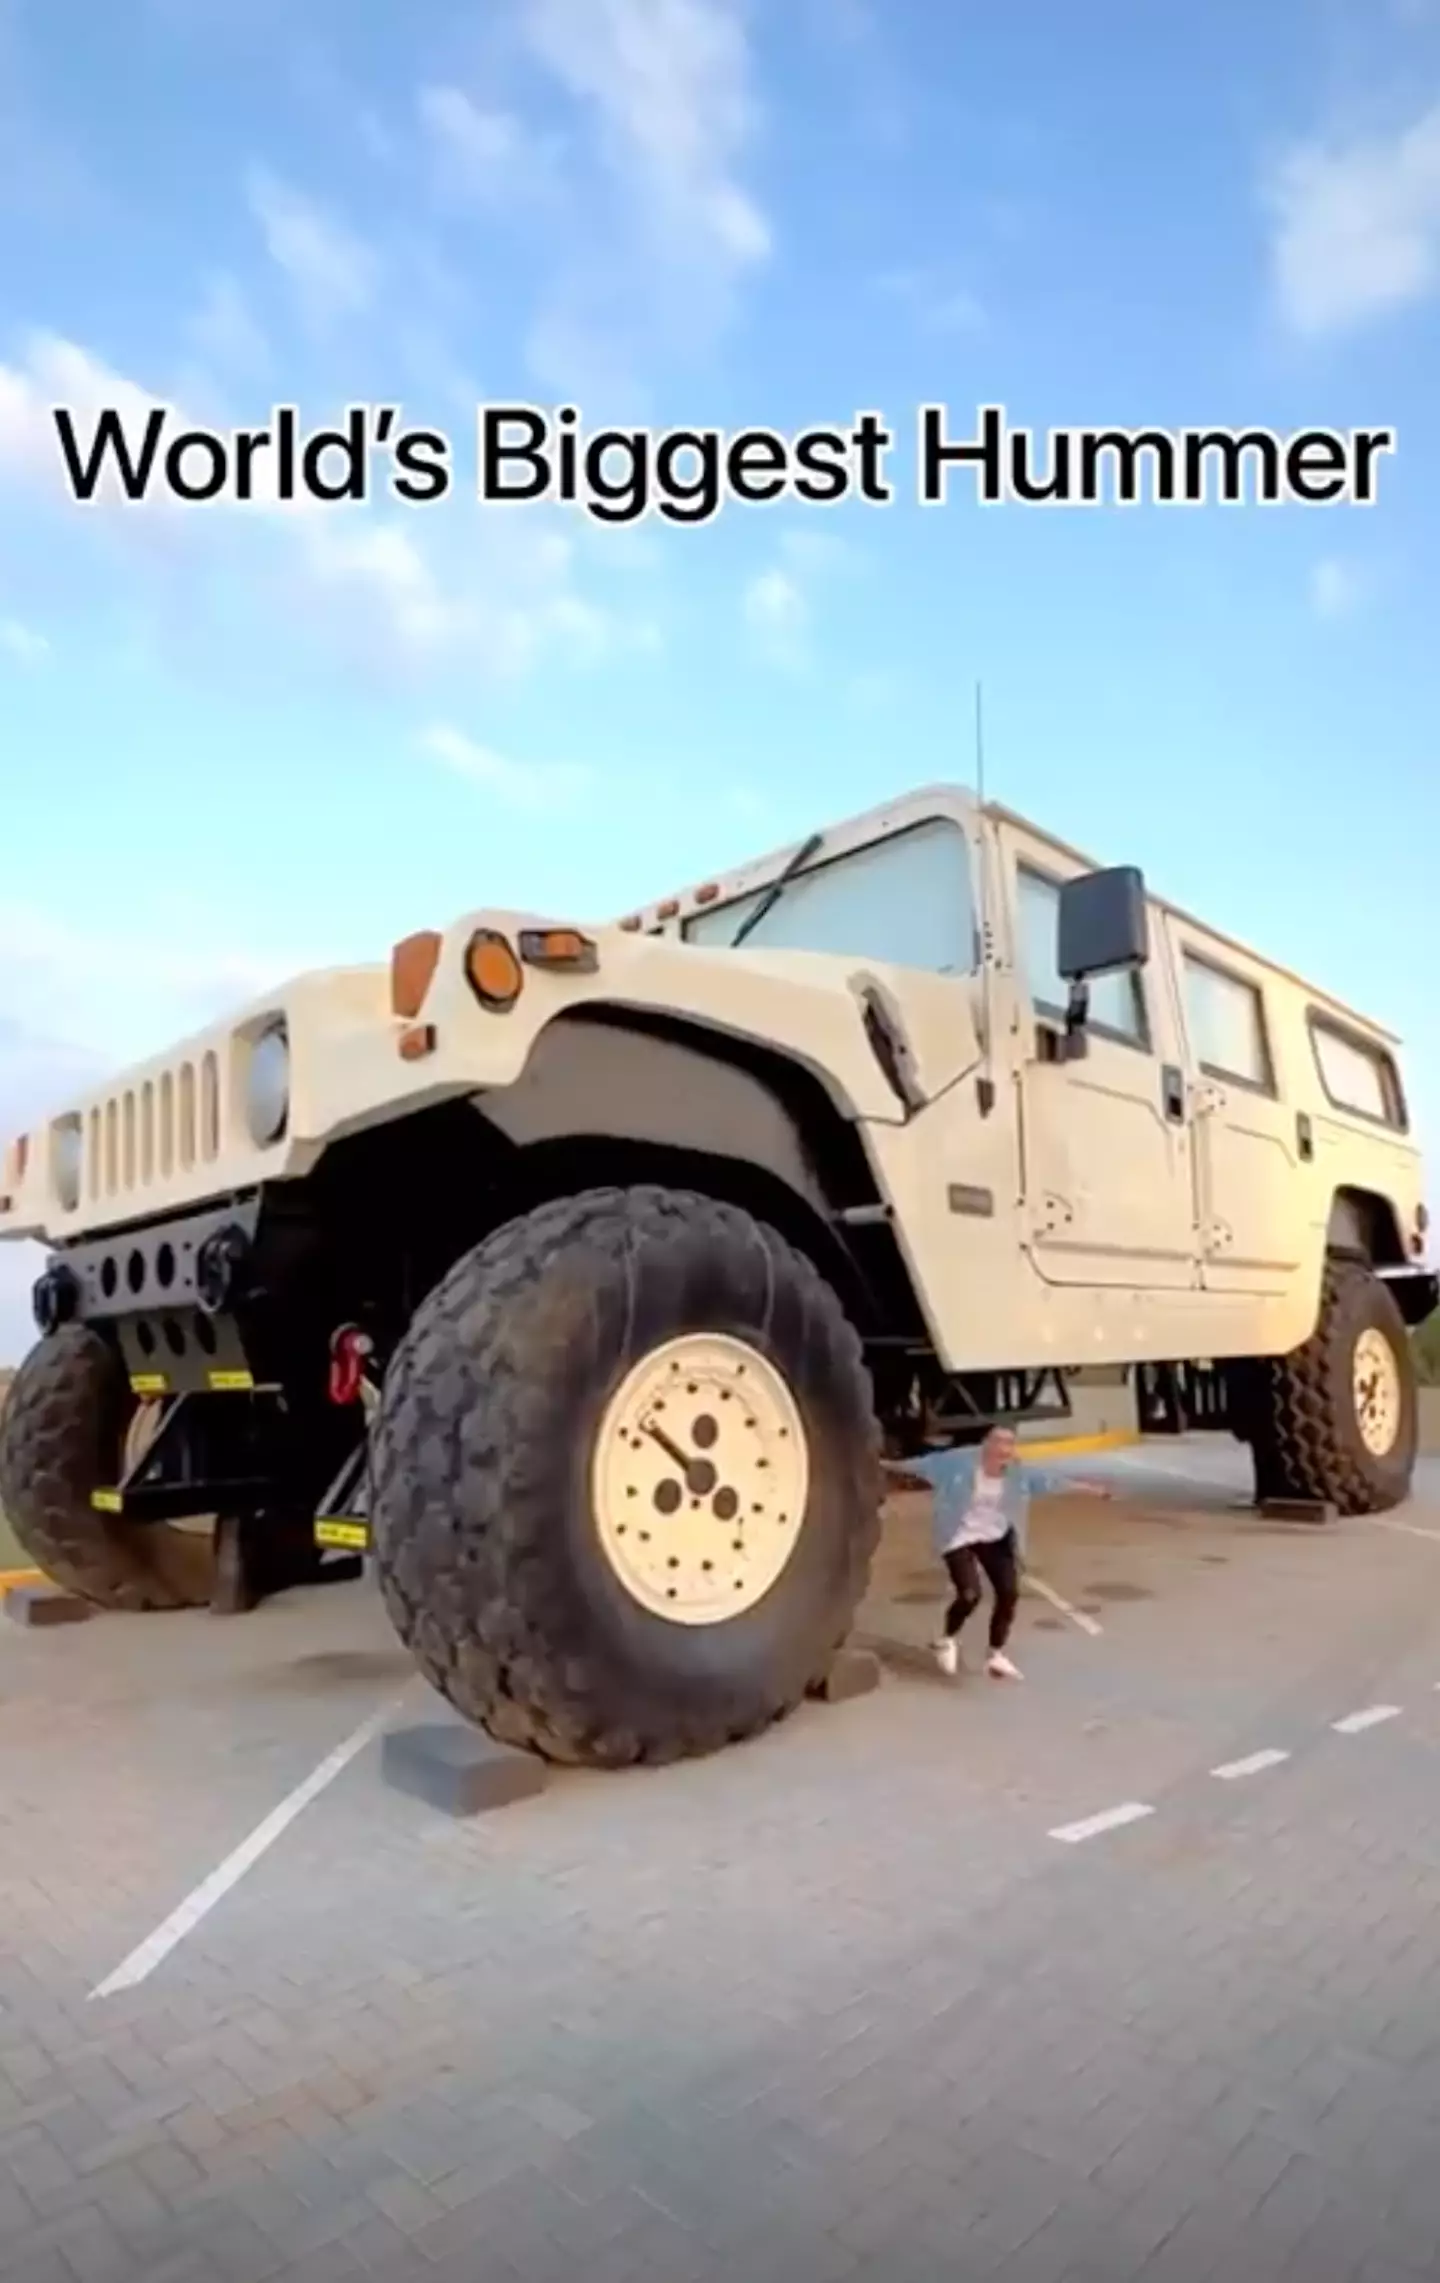 Massive 21-foot tall Hummer is bigger than most apartments